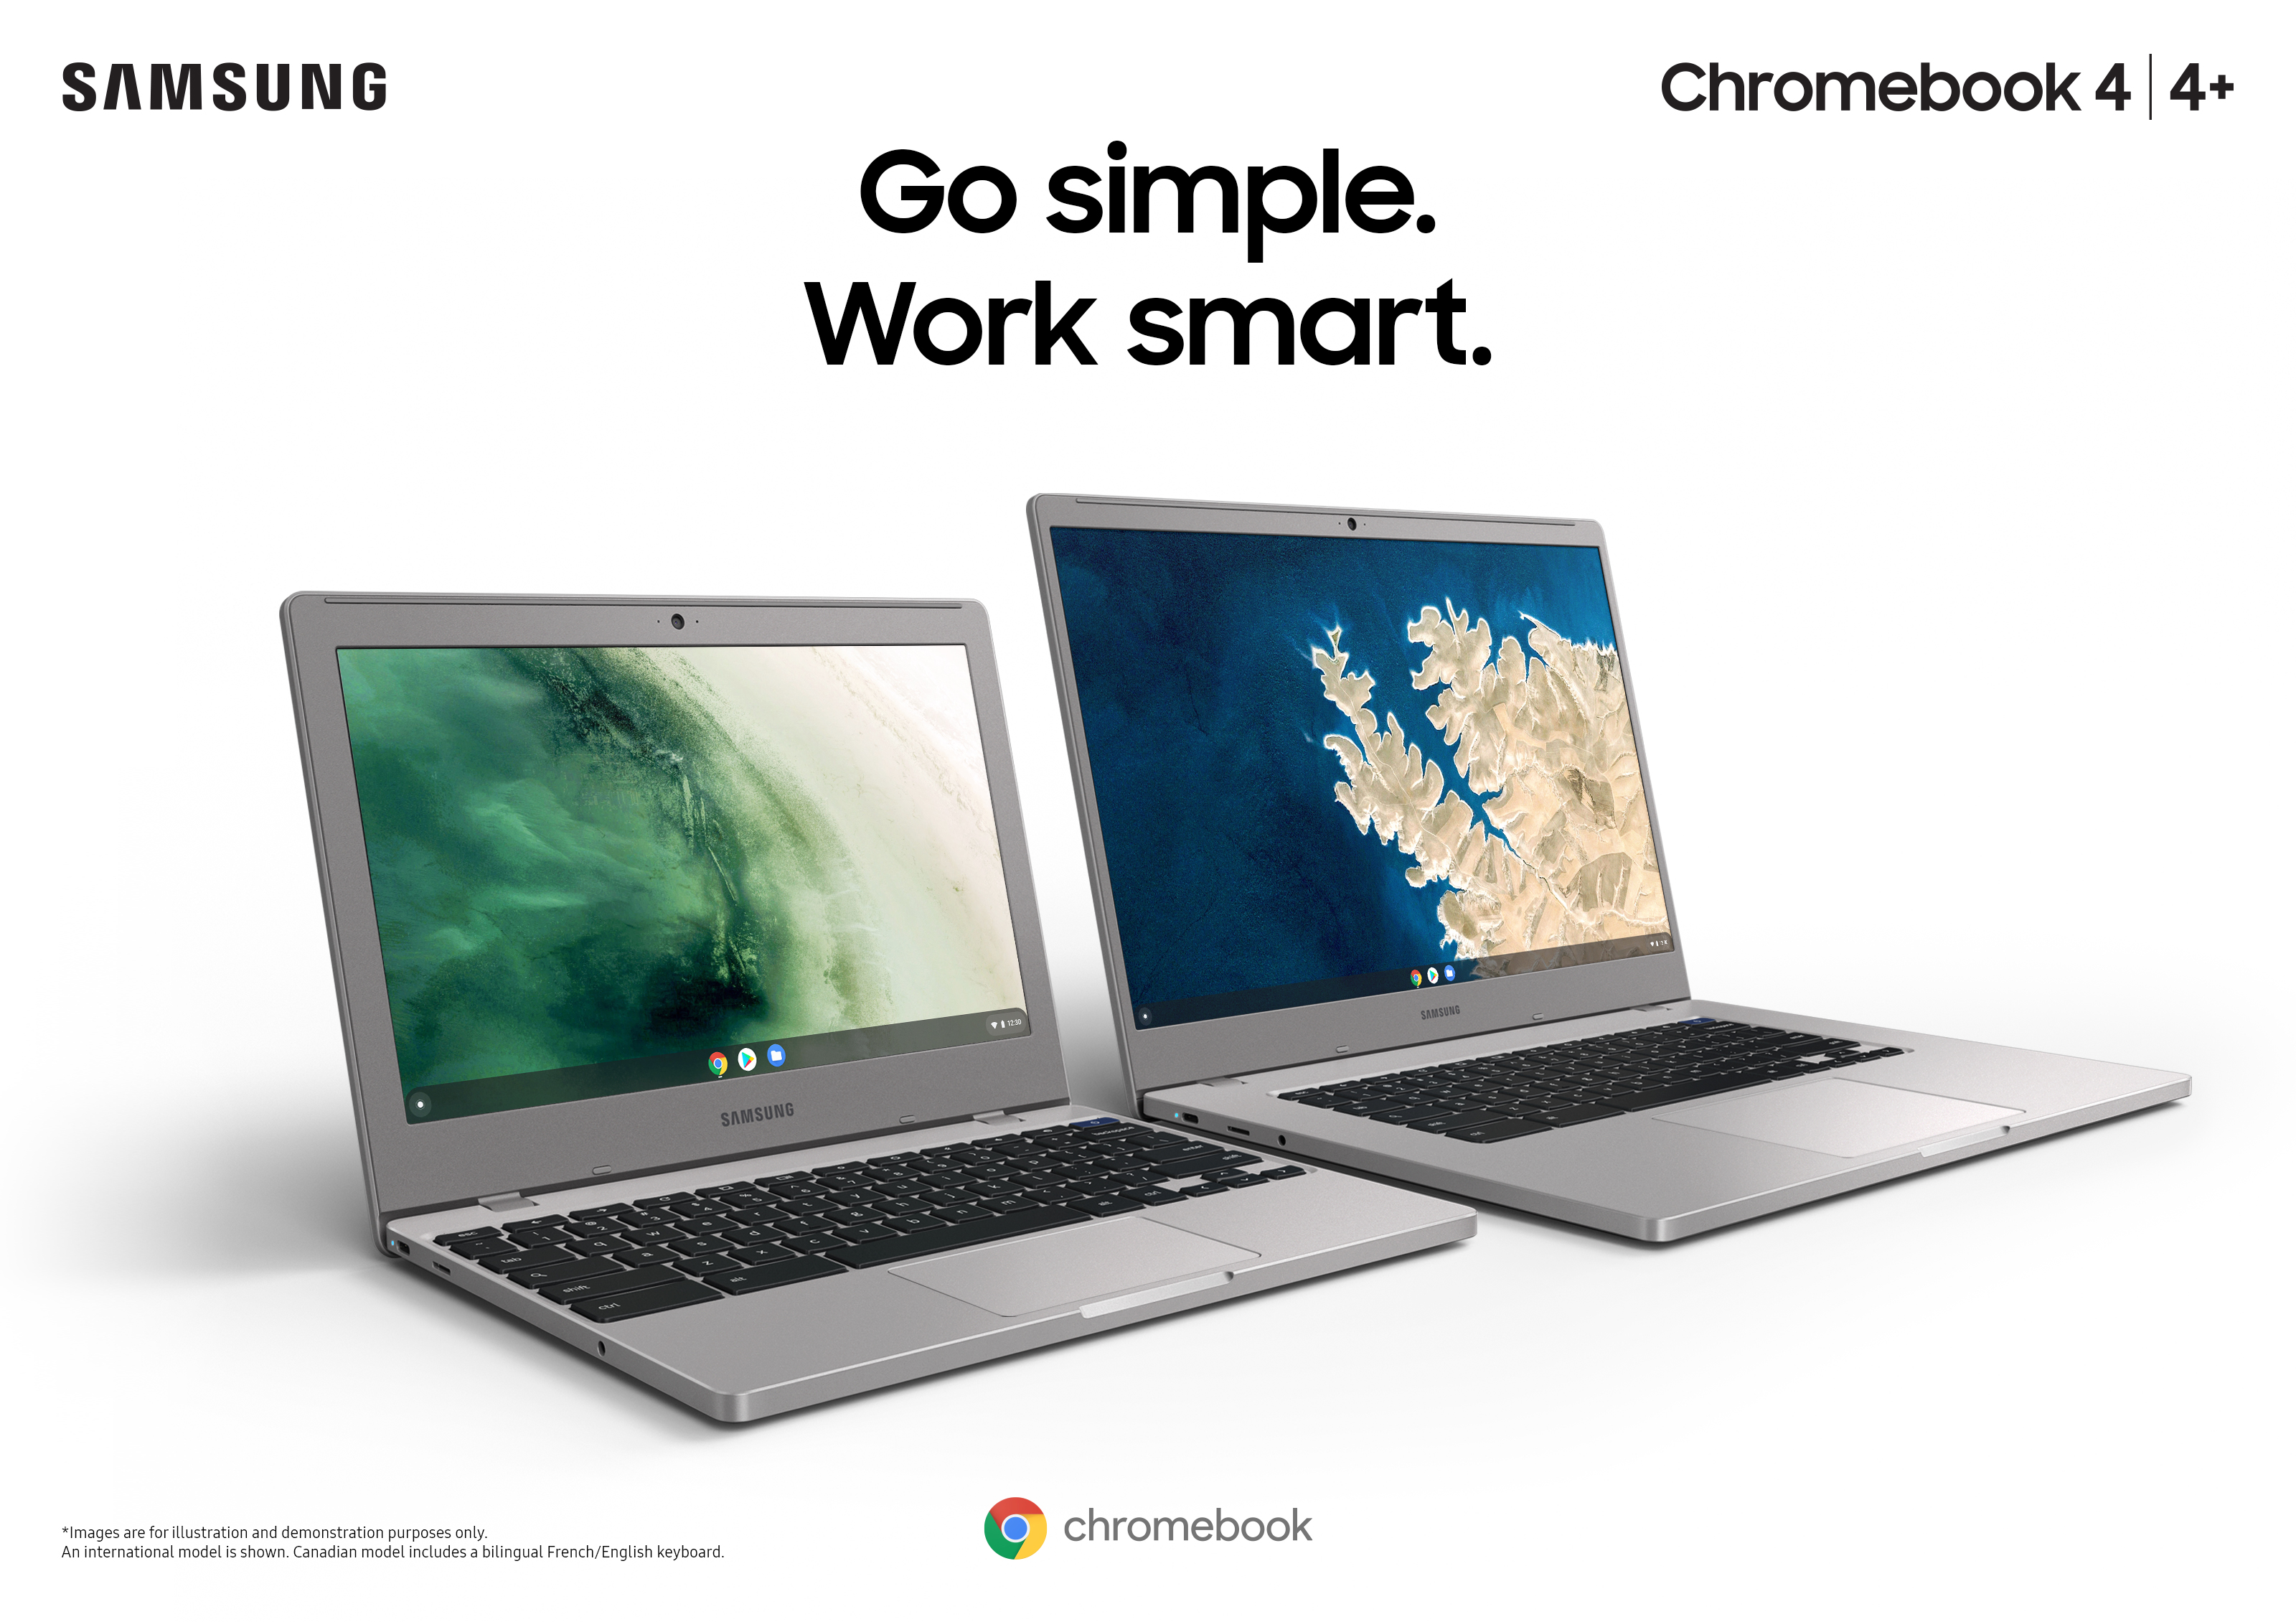 Samsung Chromebook 4 and Chromebook 4 Plus